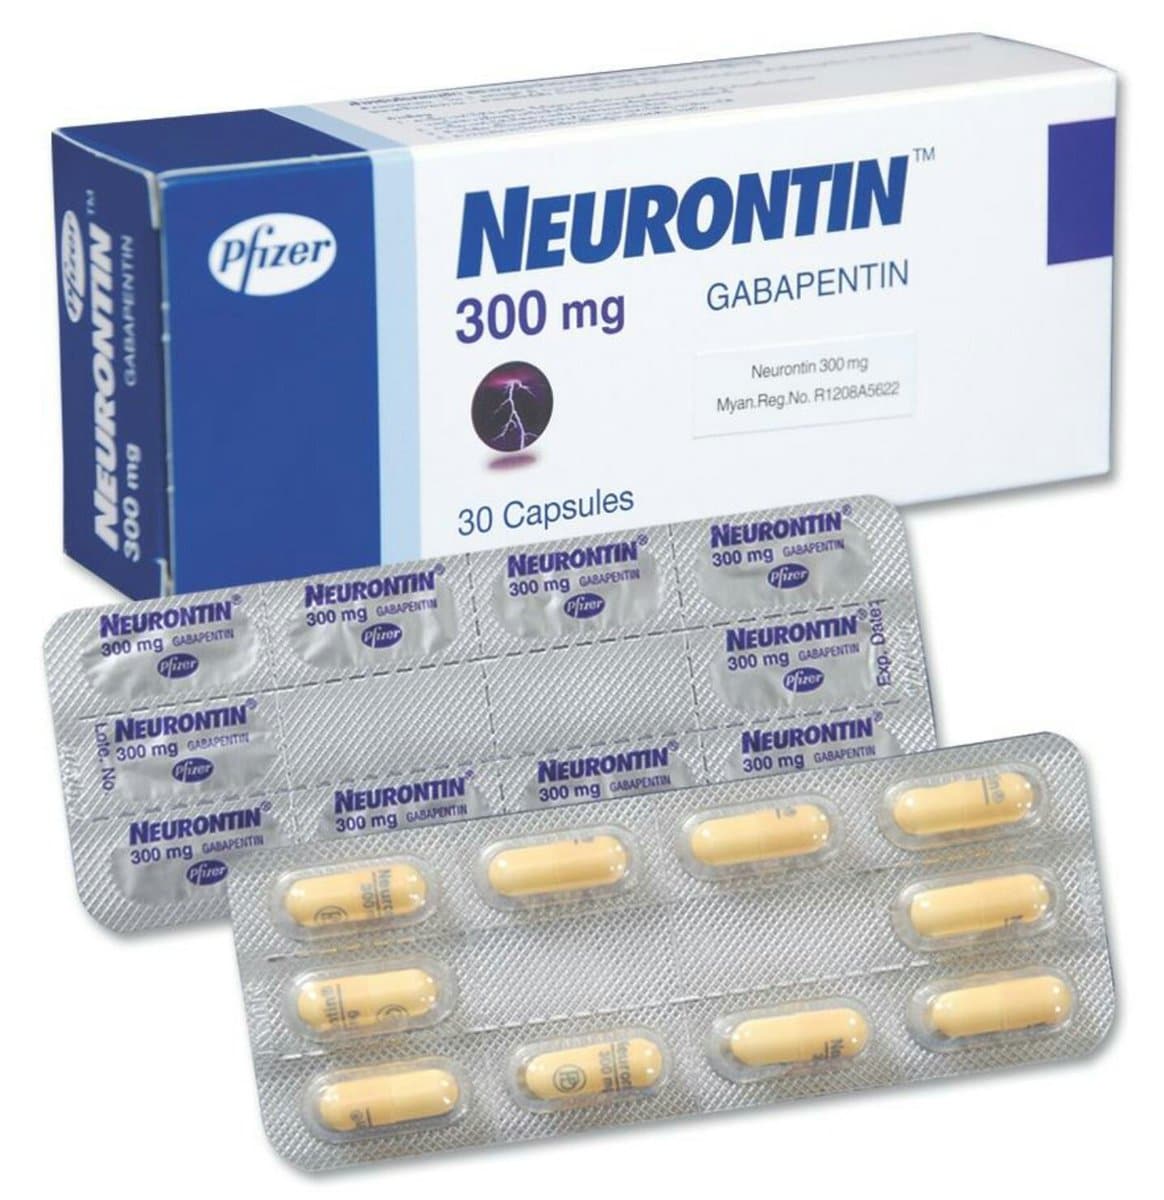 Габантин. Нейронтин габапентин 300. Нейронтин 600 мг. Нейронтин 50 мг. Габапентин Нейронтин 300мг.